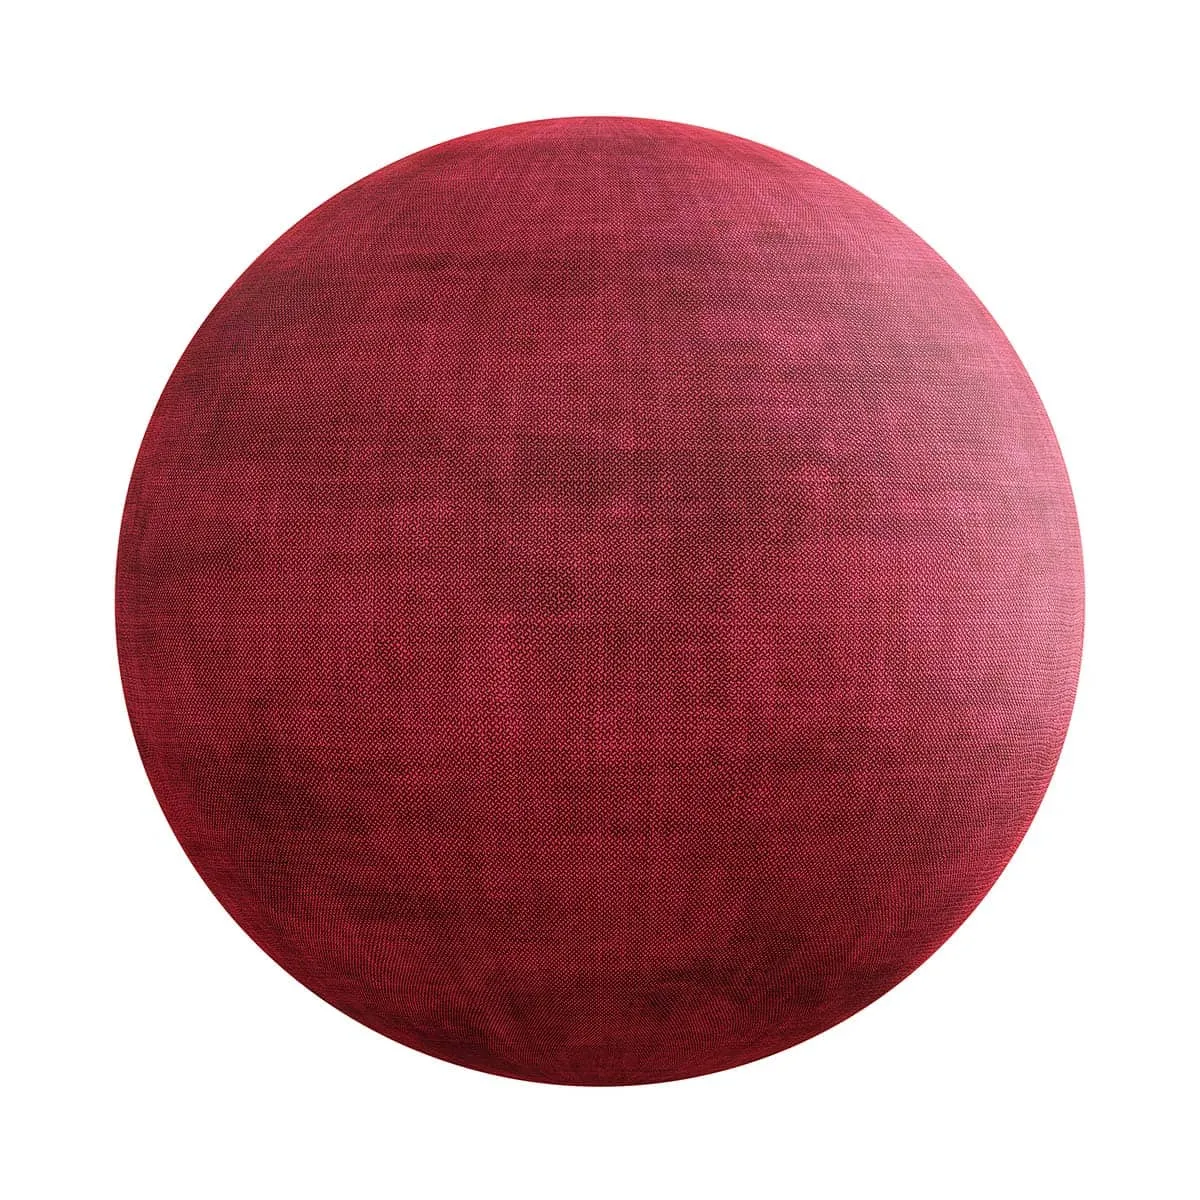 PBR Textures Volume 27 – Fabrics – 4K – 8K – red_fabric_26_29